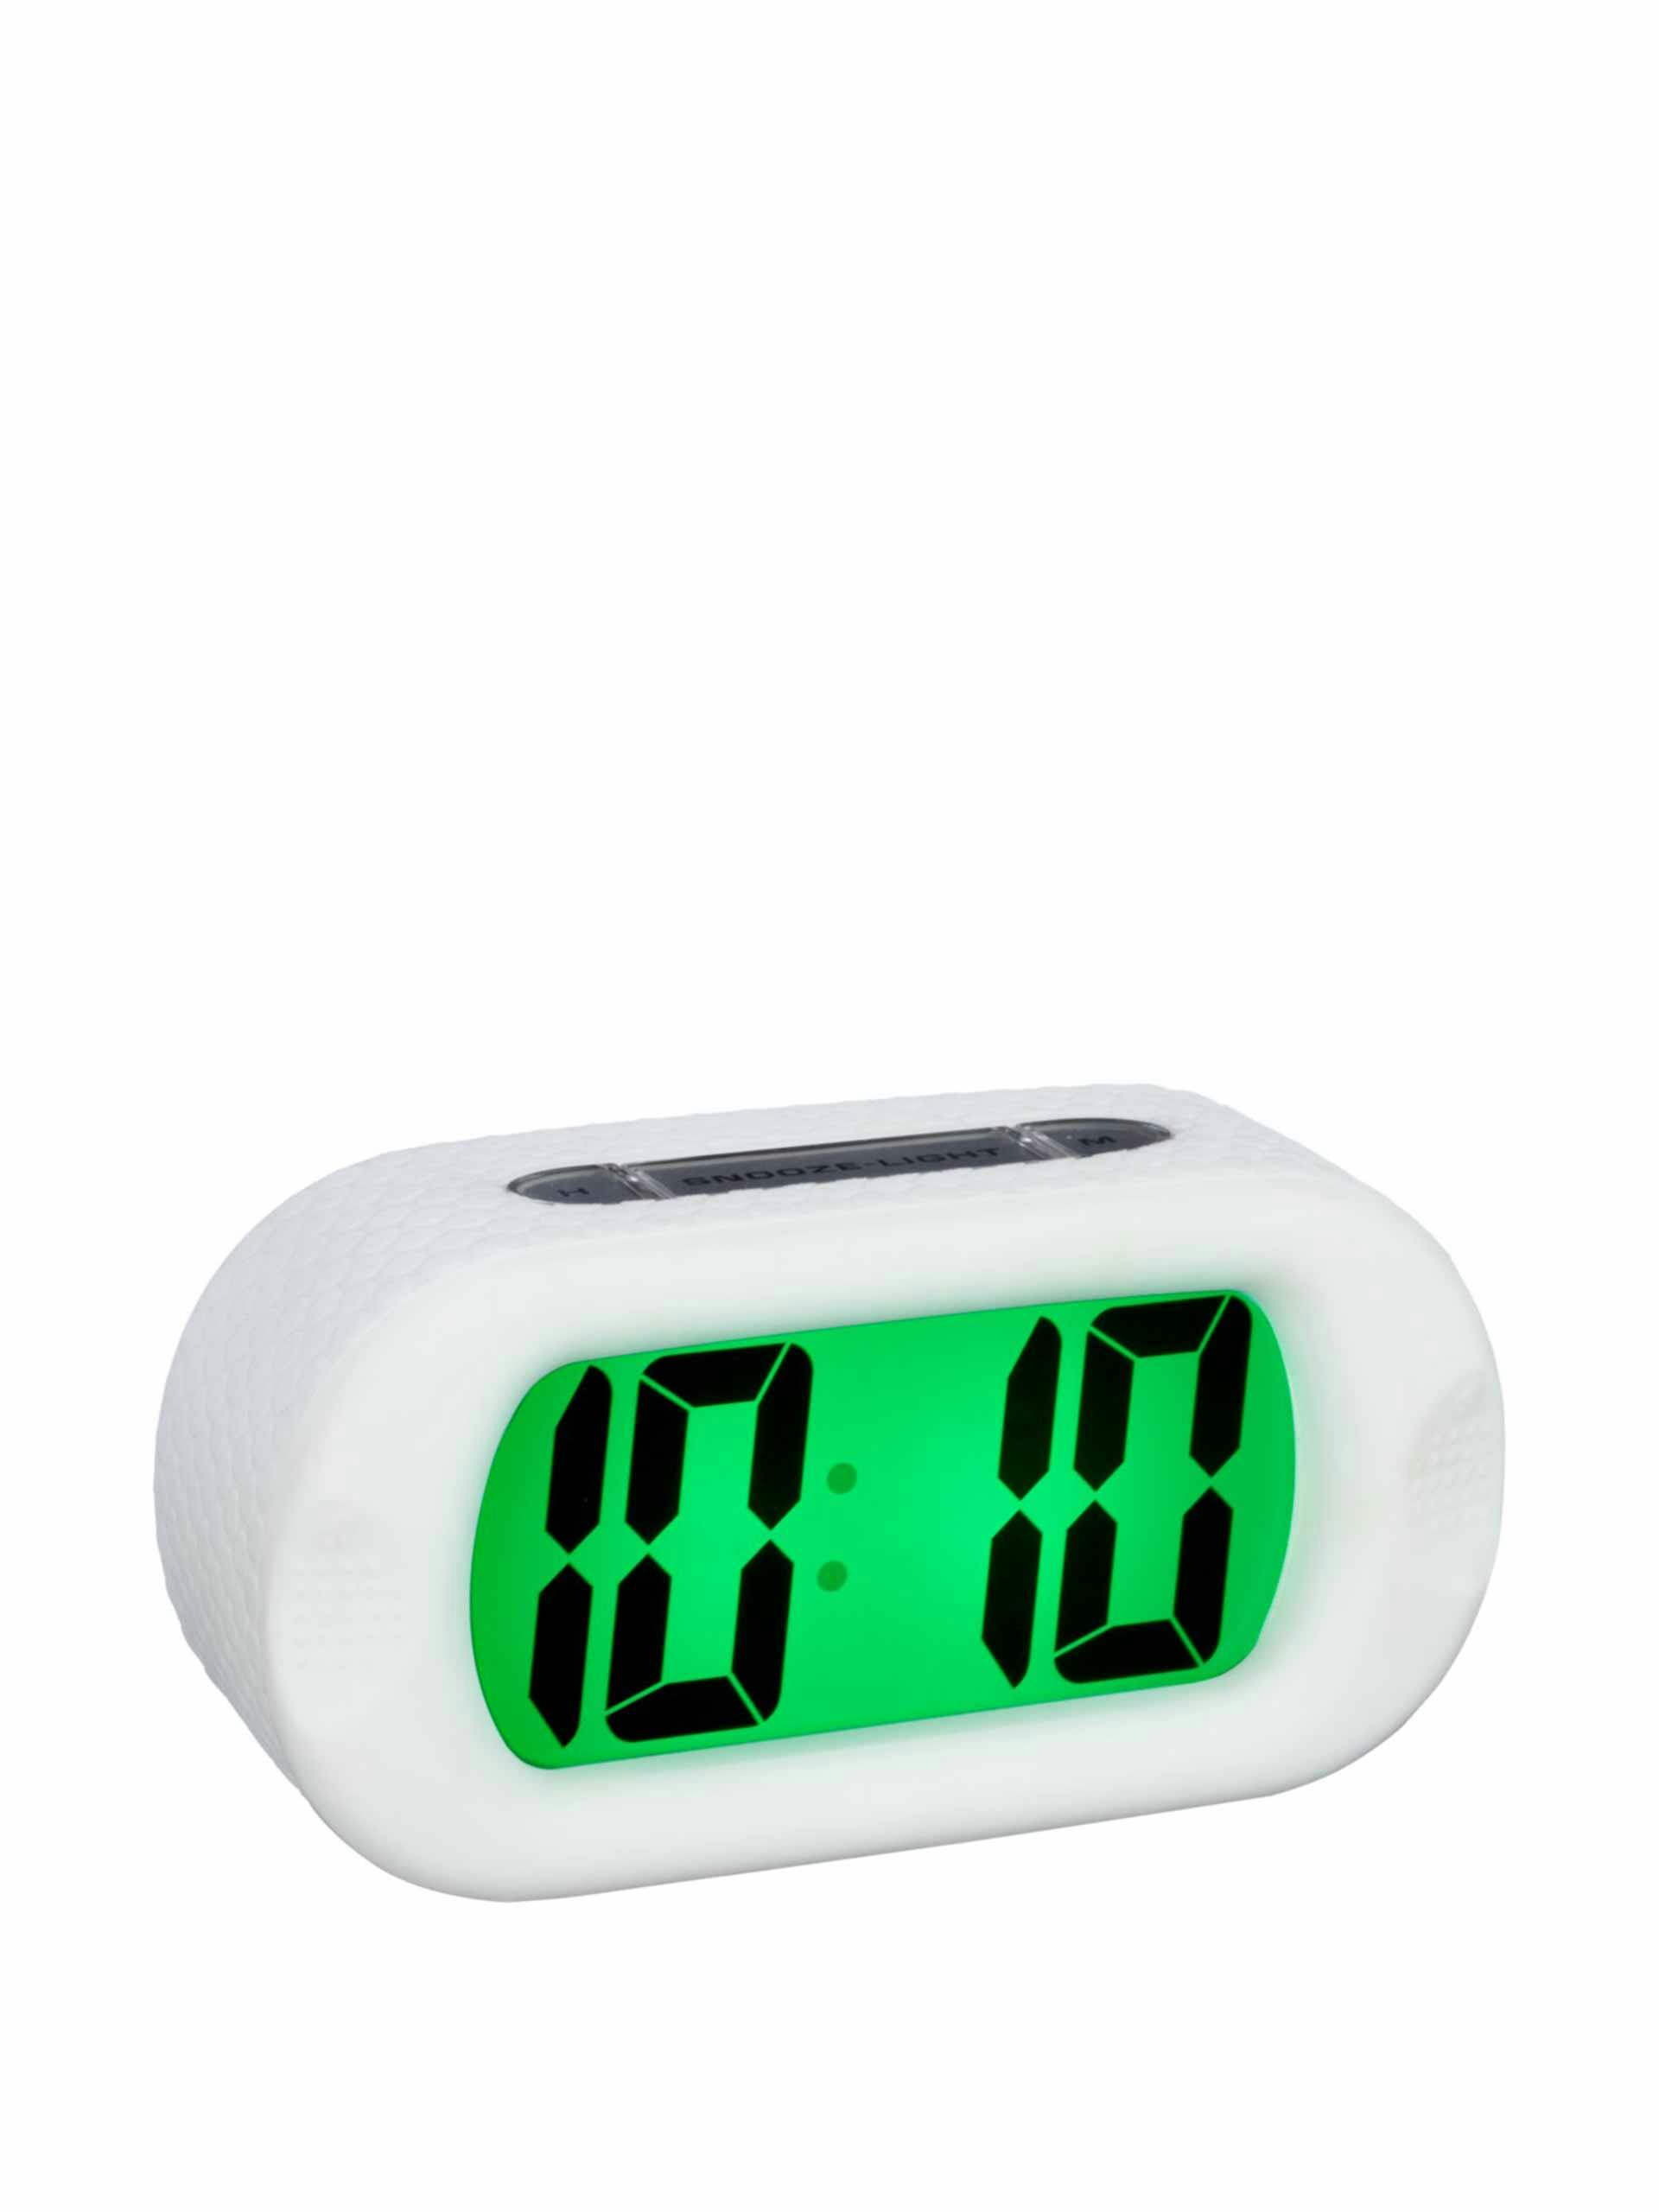 Silicone digital alarm clock